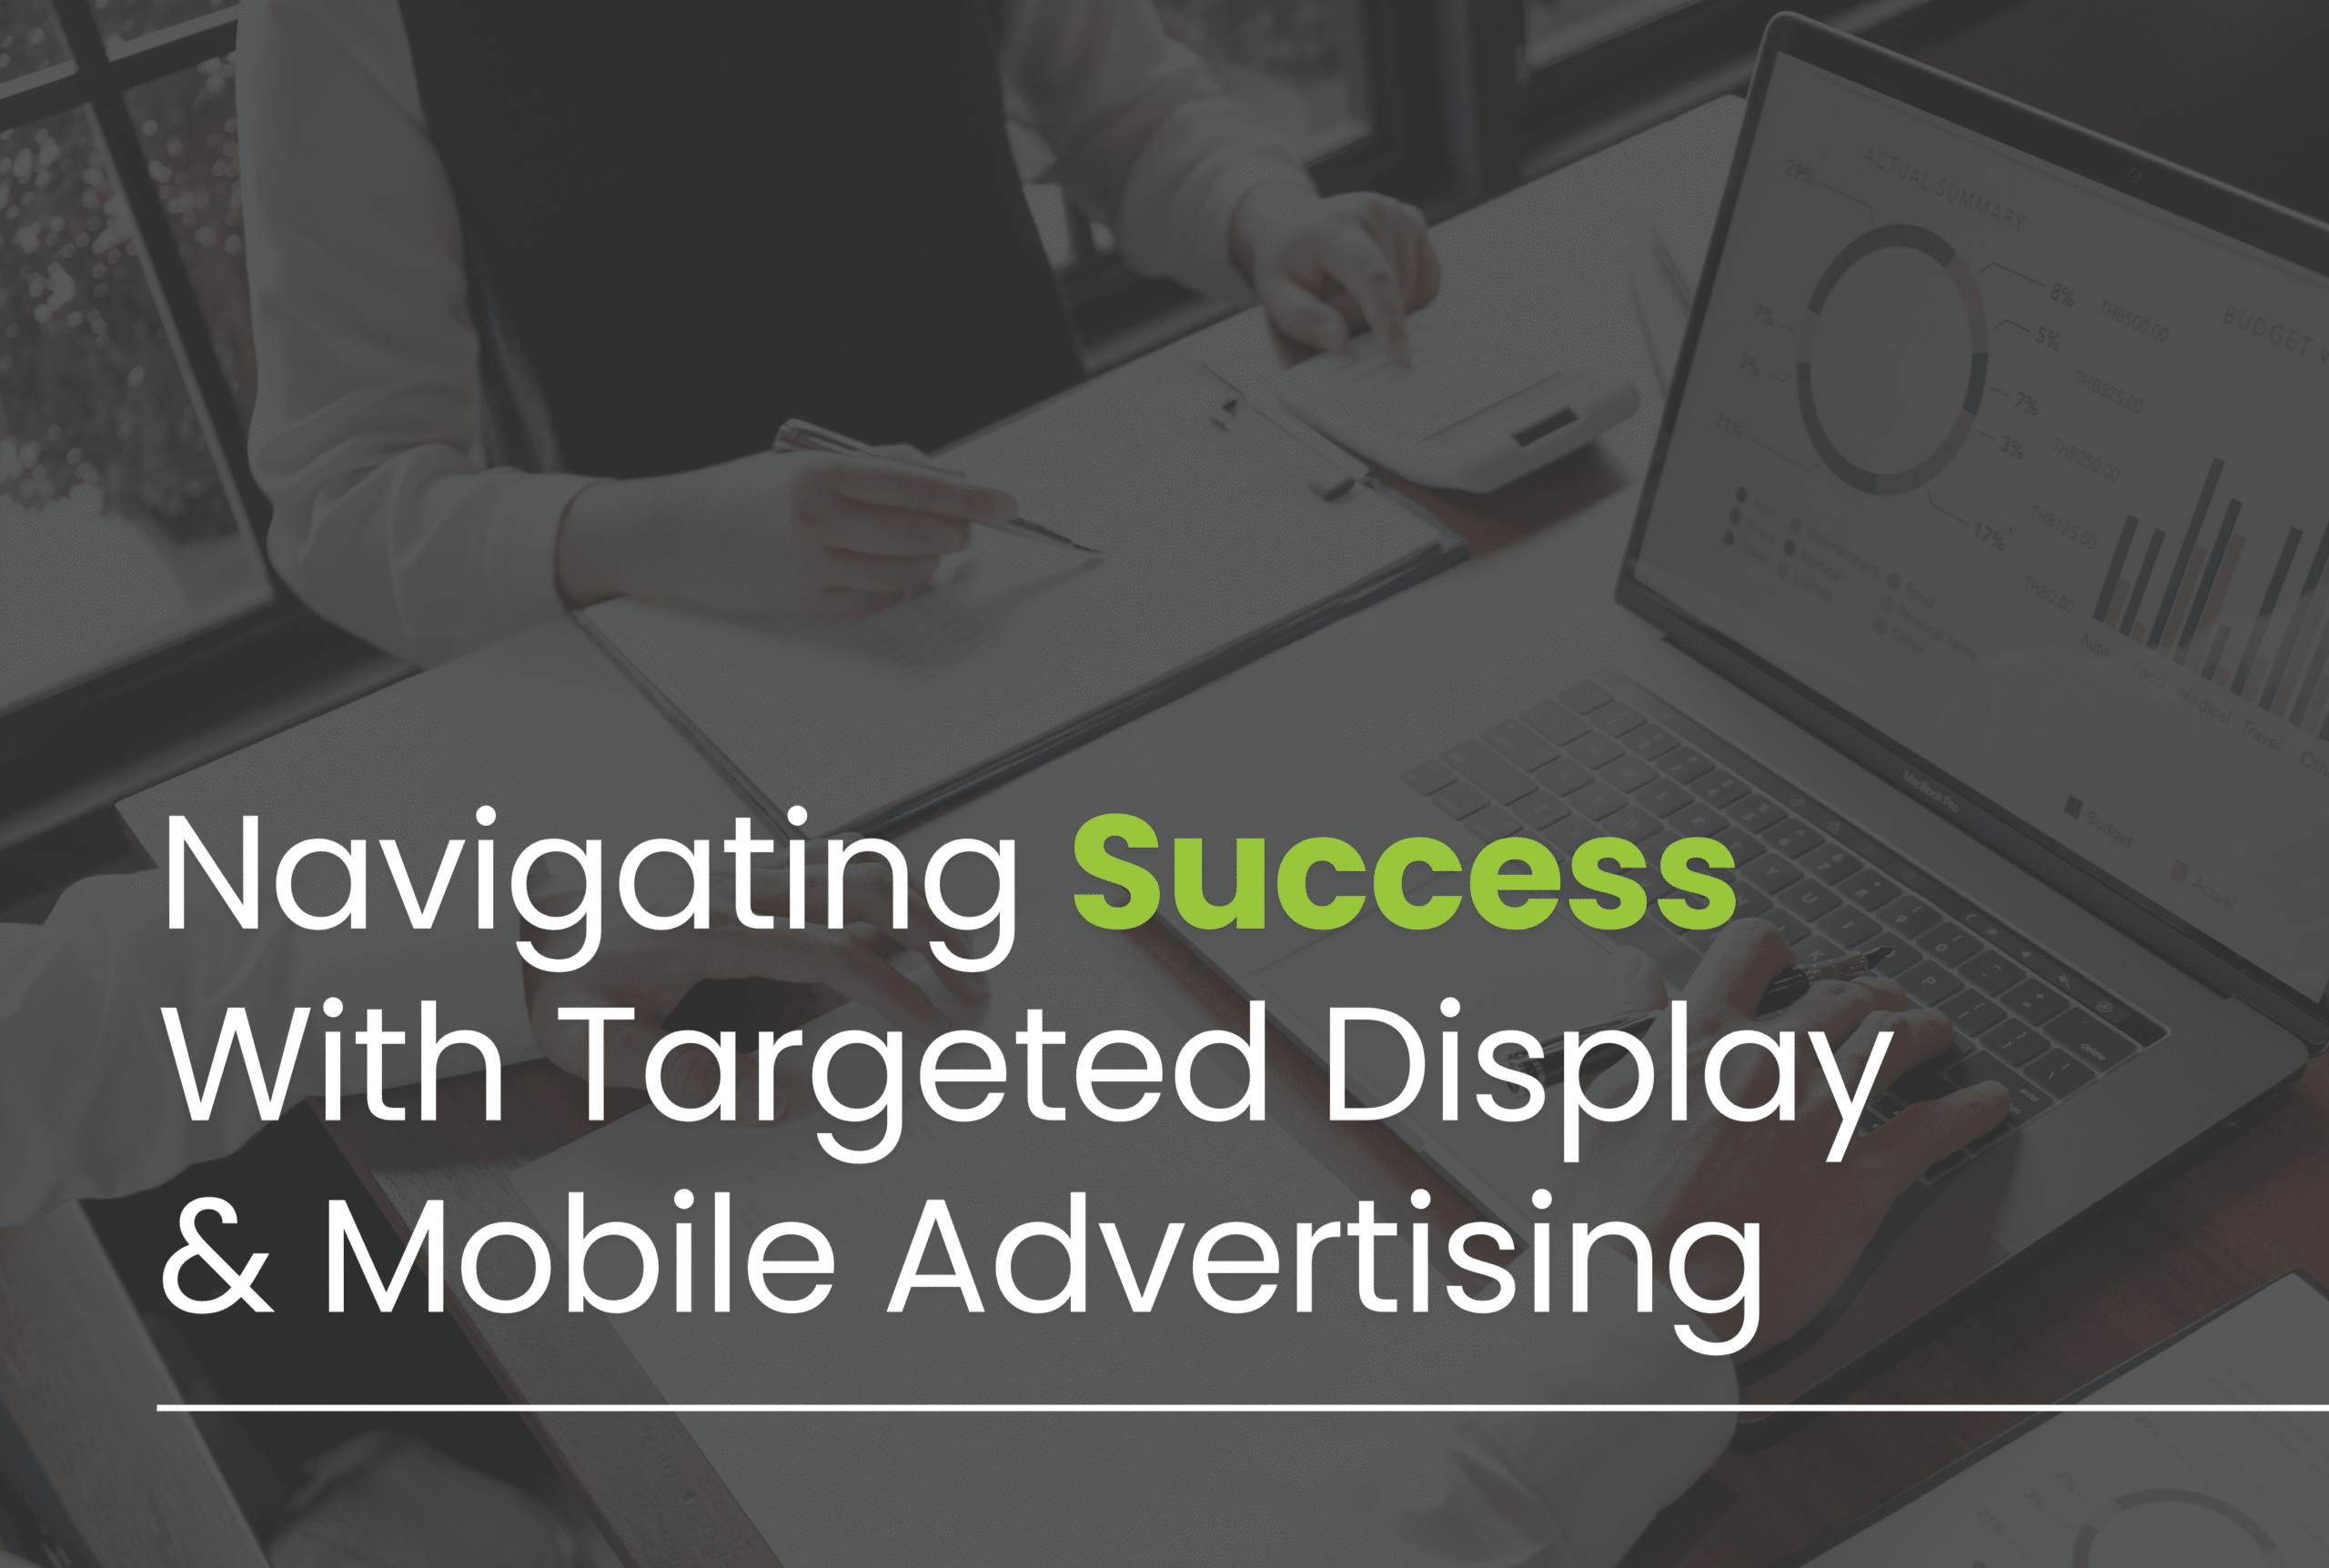 Targeted display & Mobile Advertising